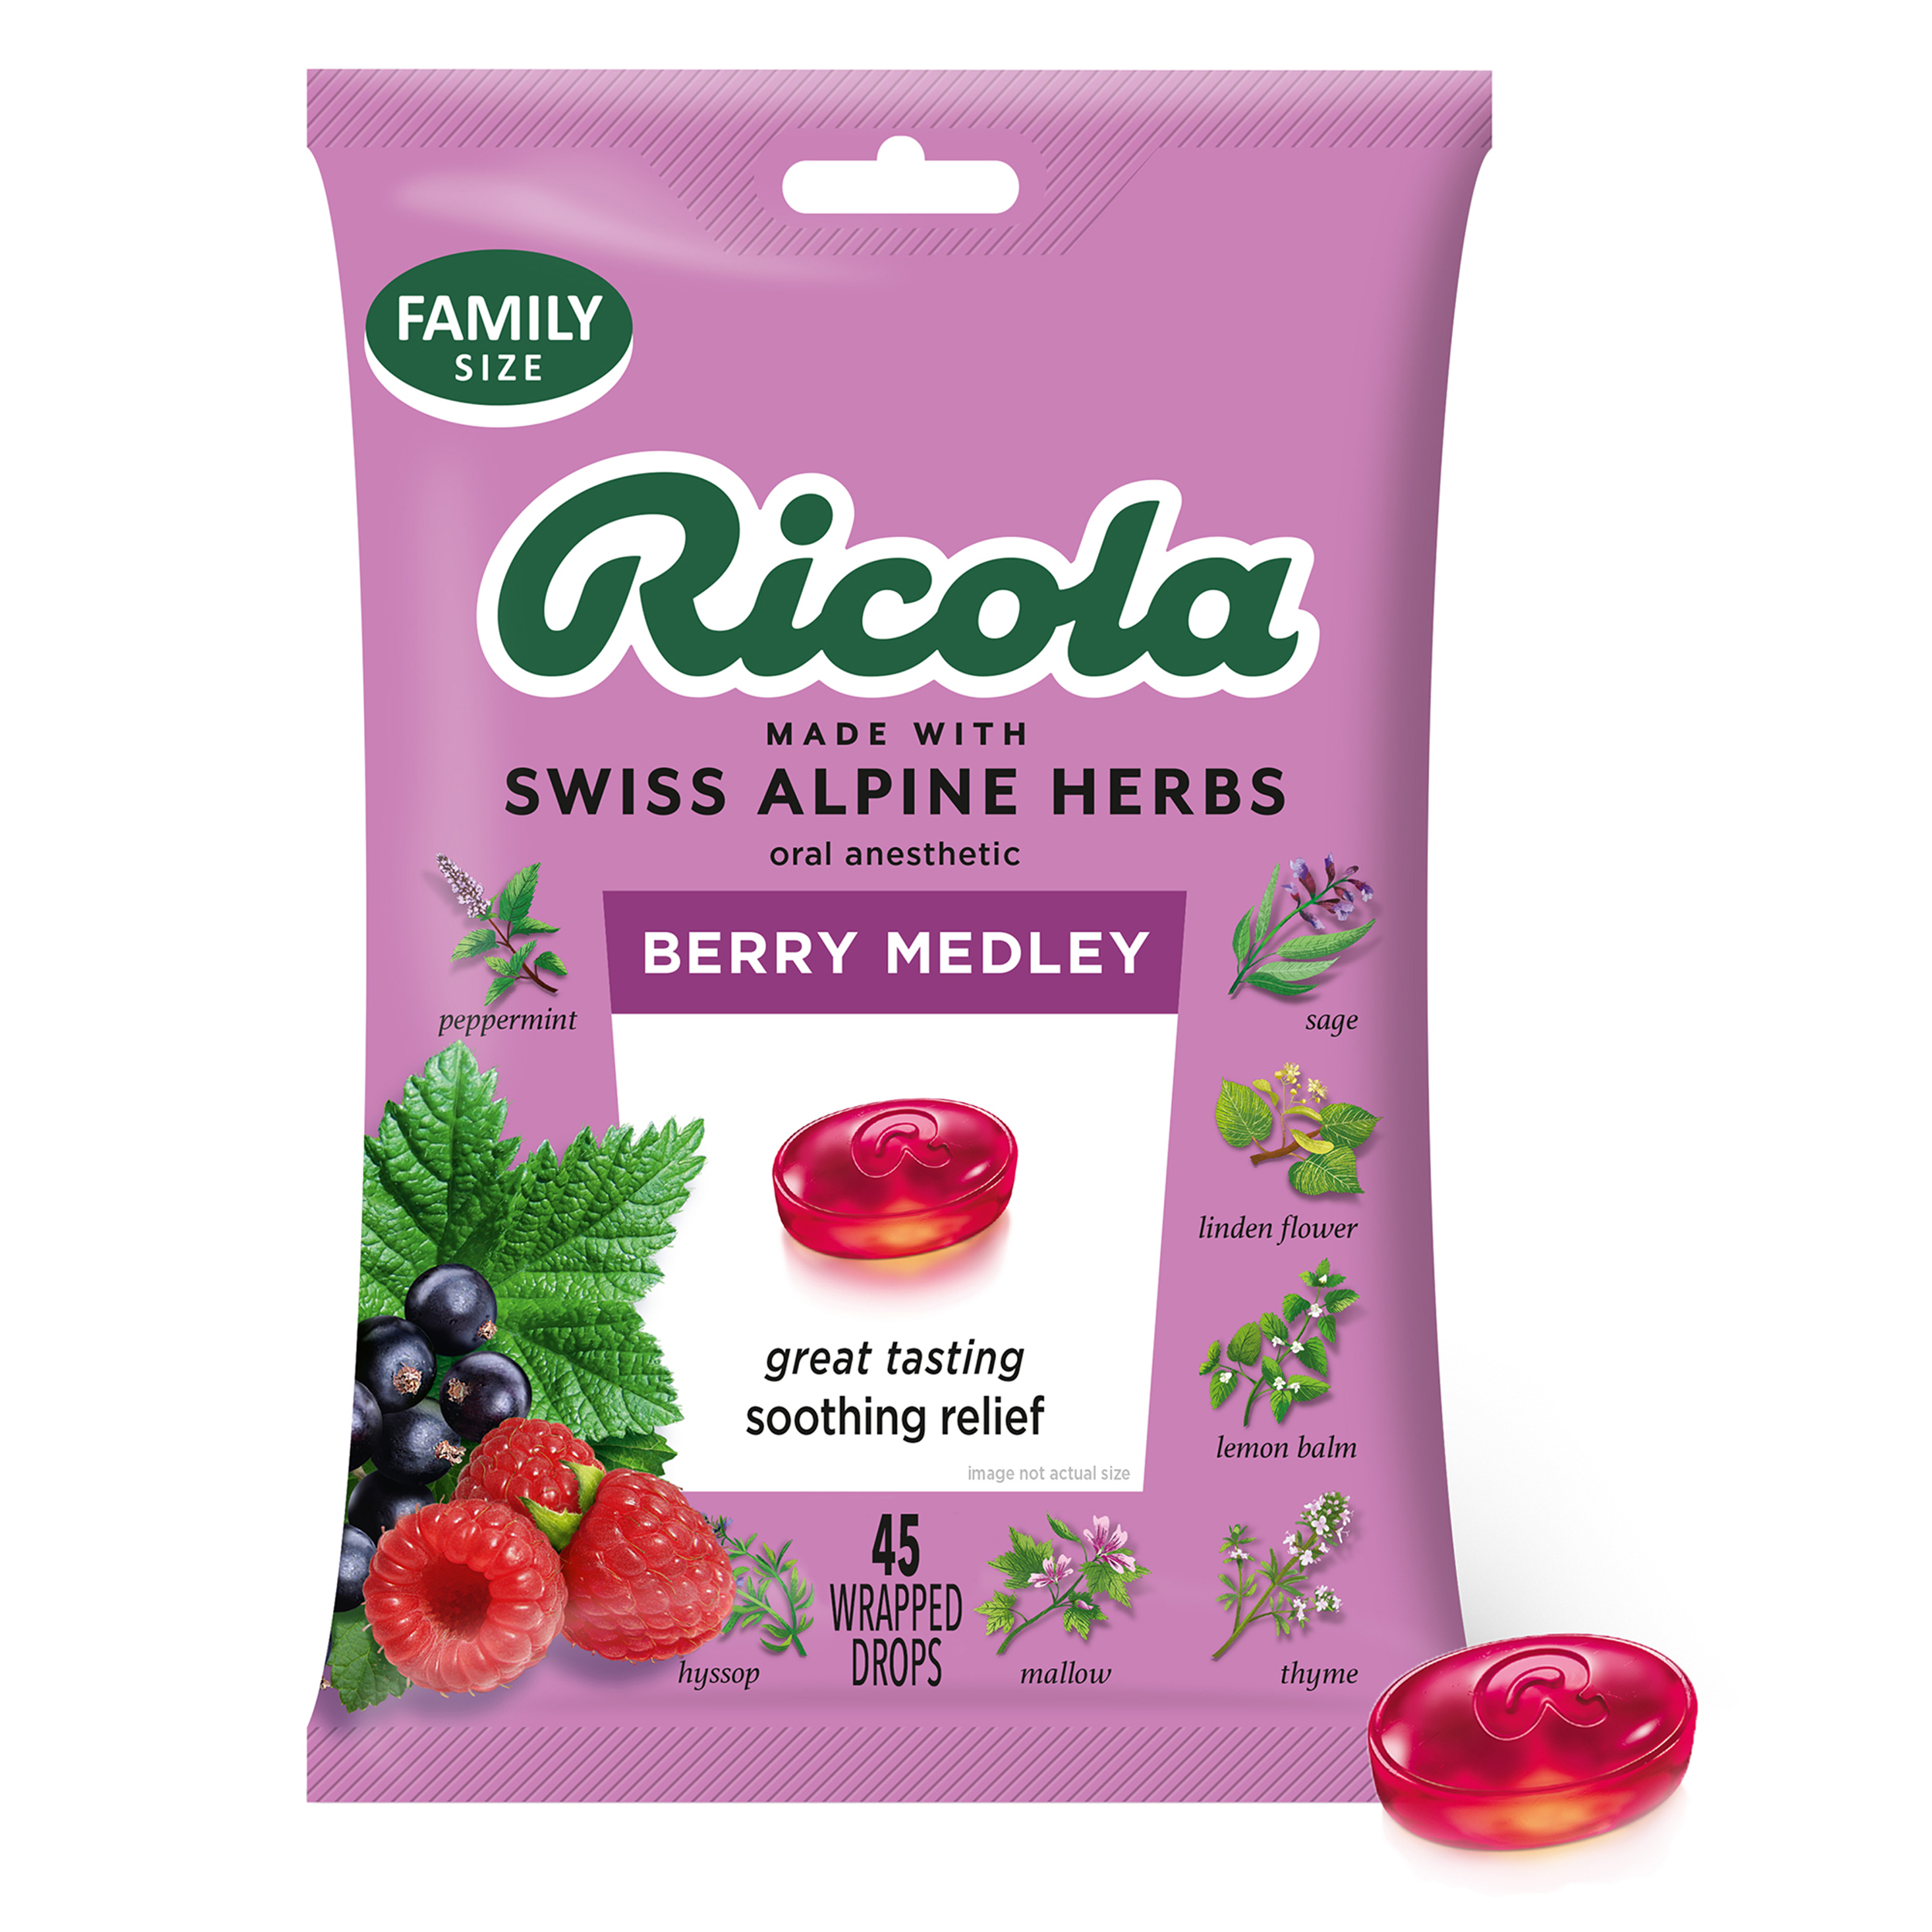 Licorice Candy - 1kg jar RICOLA